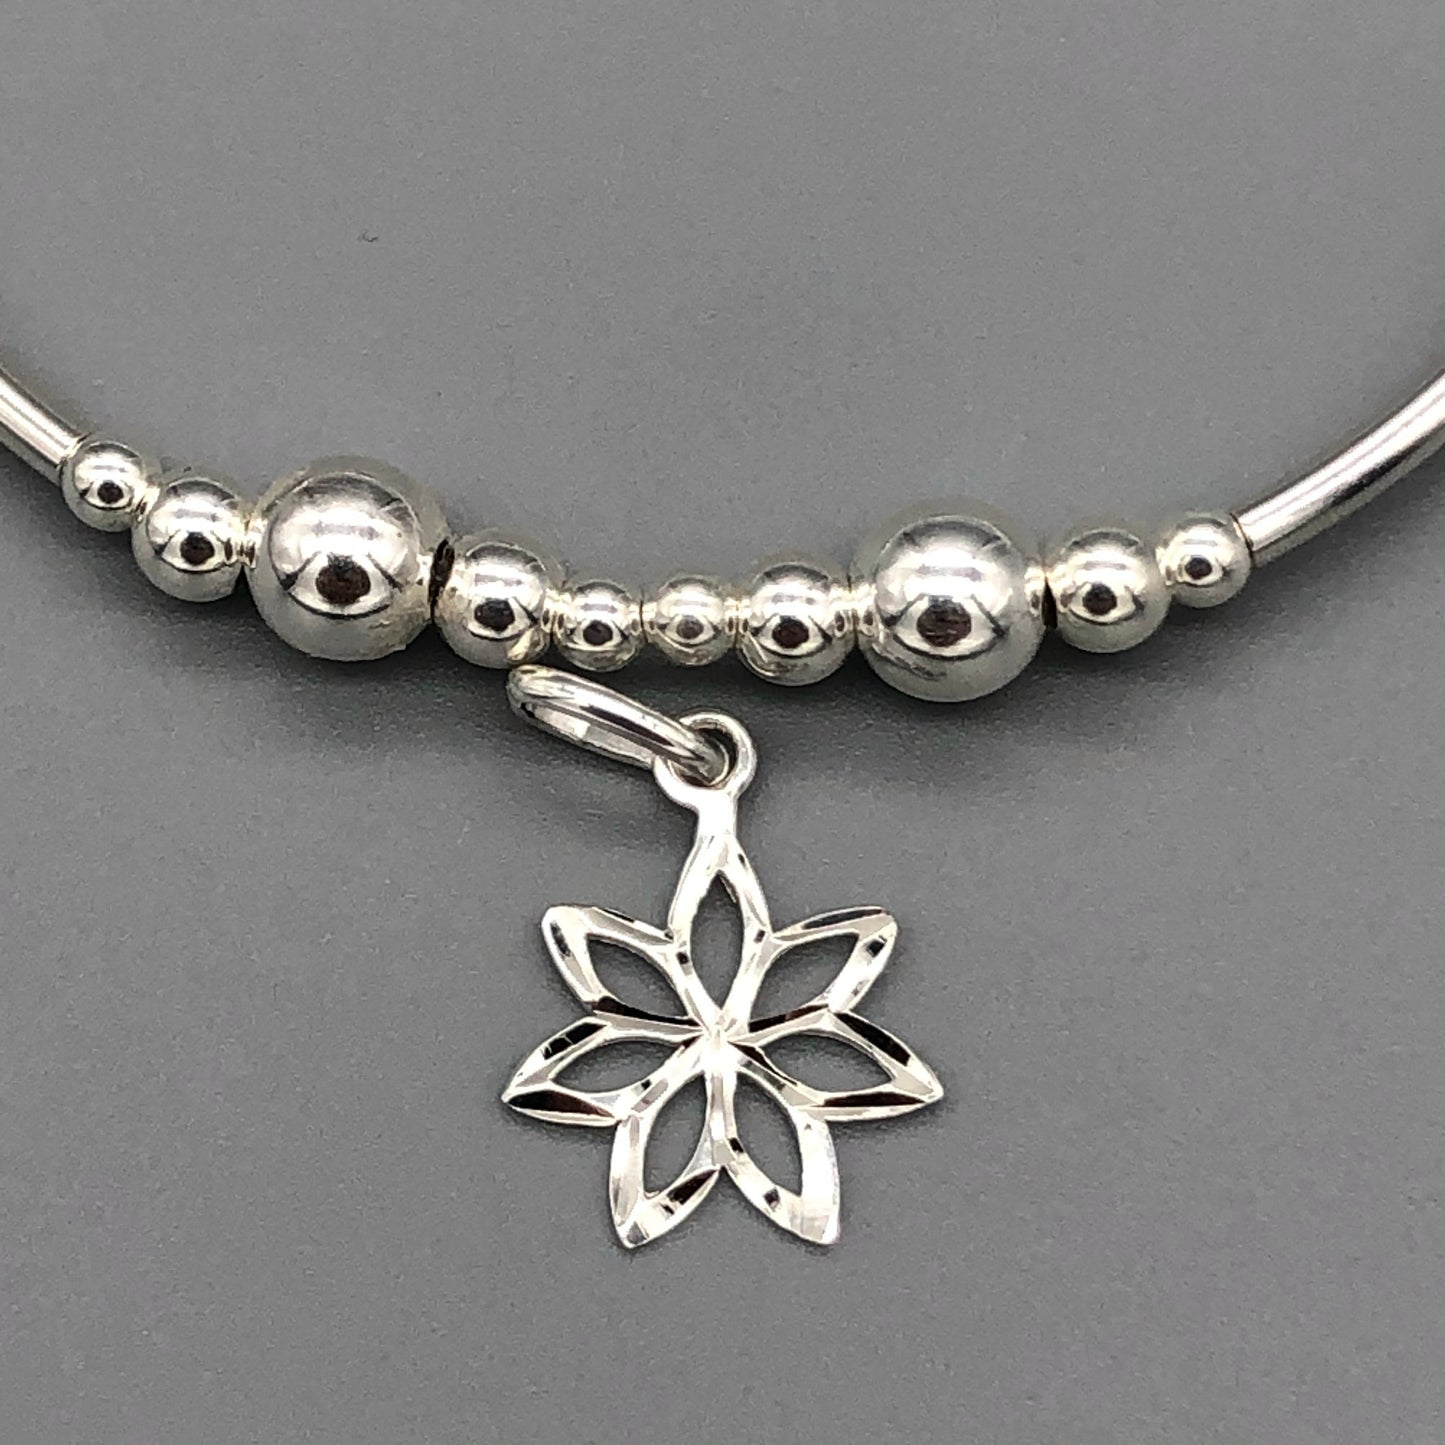 Lilly flower charm women's sterling silver stack bracelet